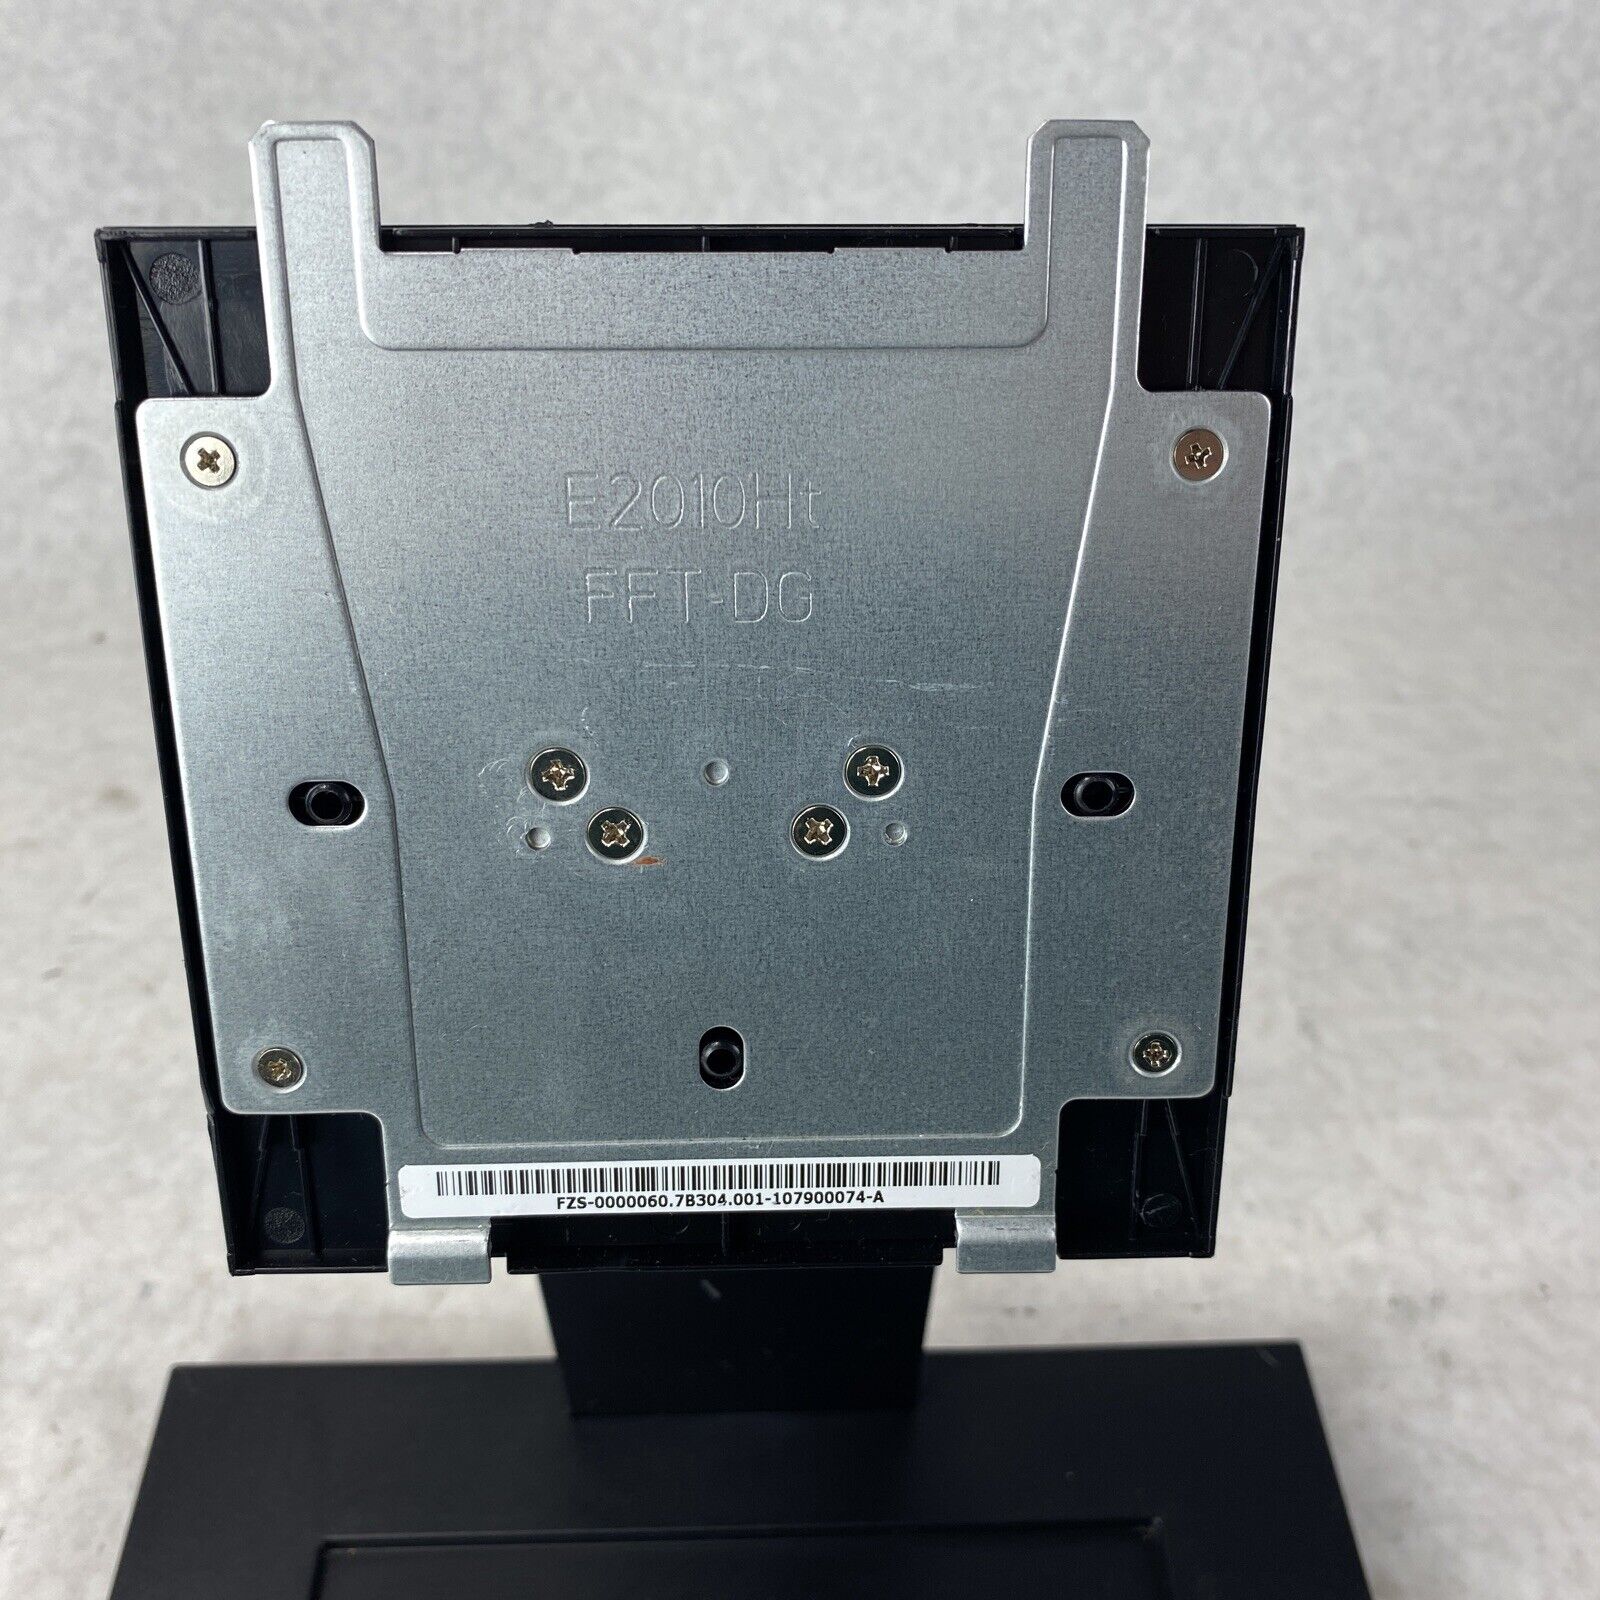 Dell E2010Ht FFT-DG Tilting Monitor Stand